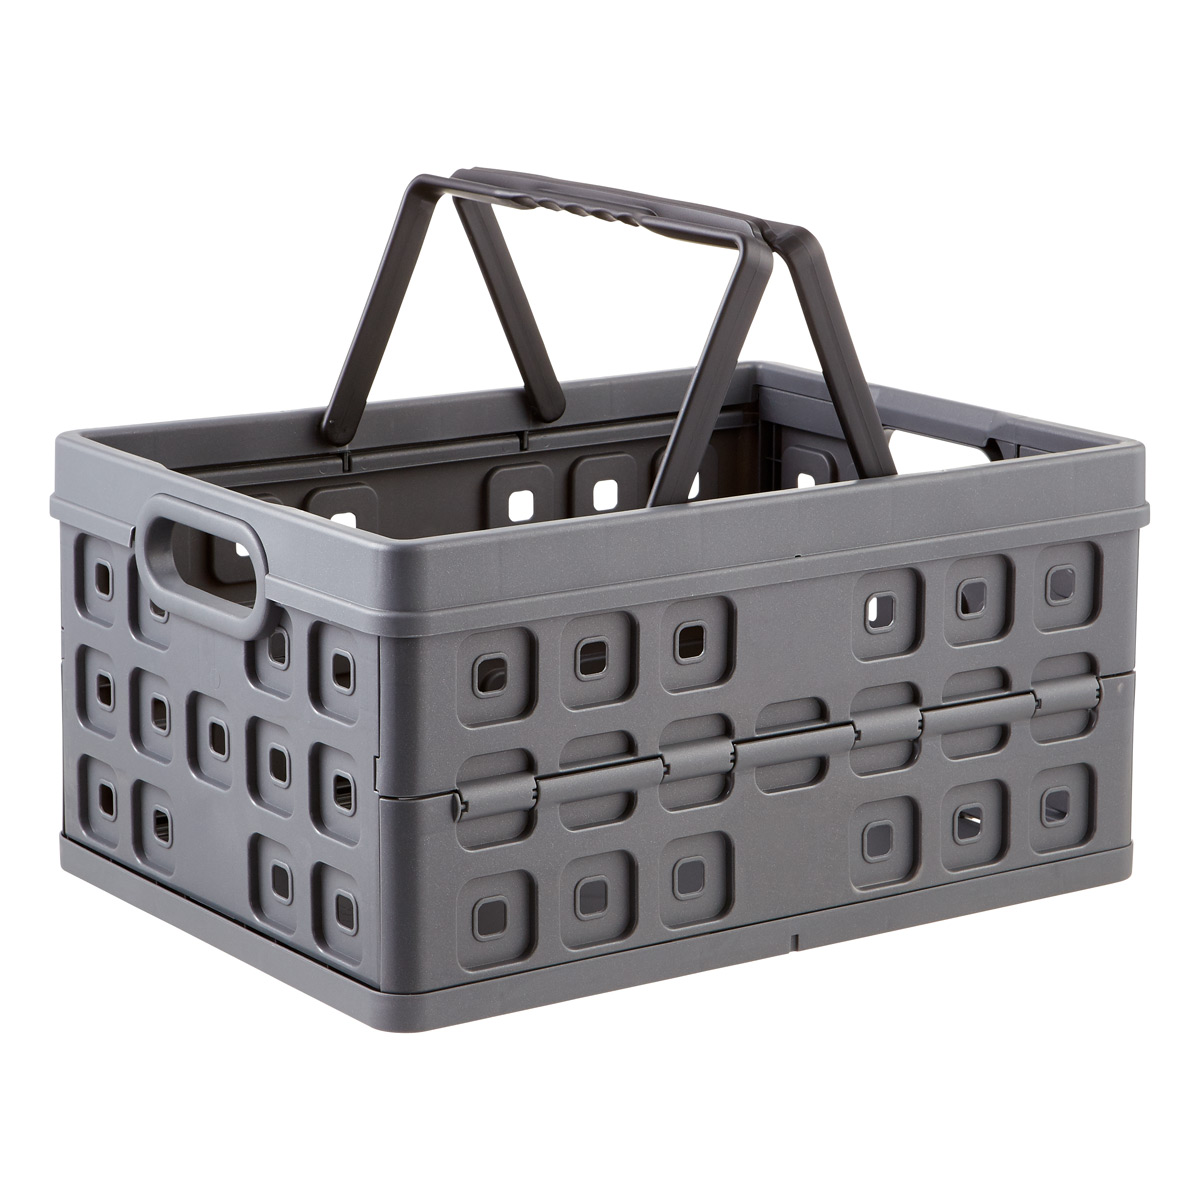 Folding Plastic Storage Shopping Basket Crate Caravan R8P7 NEW Motorhome X0V6